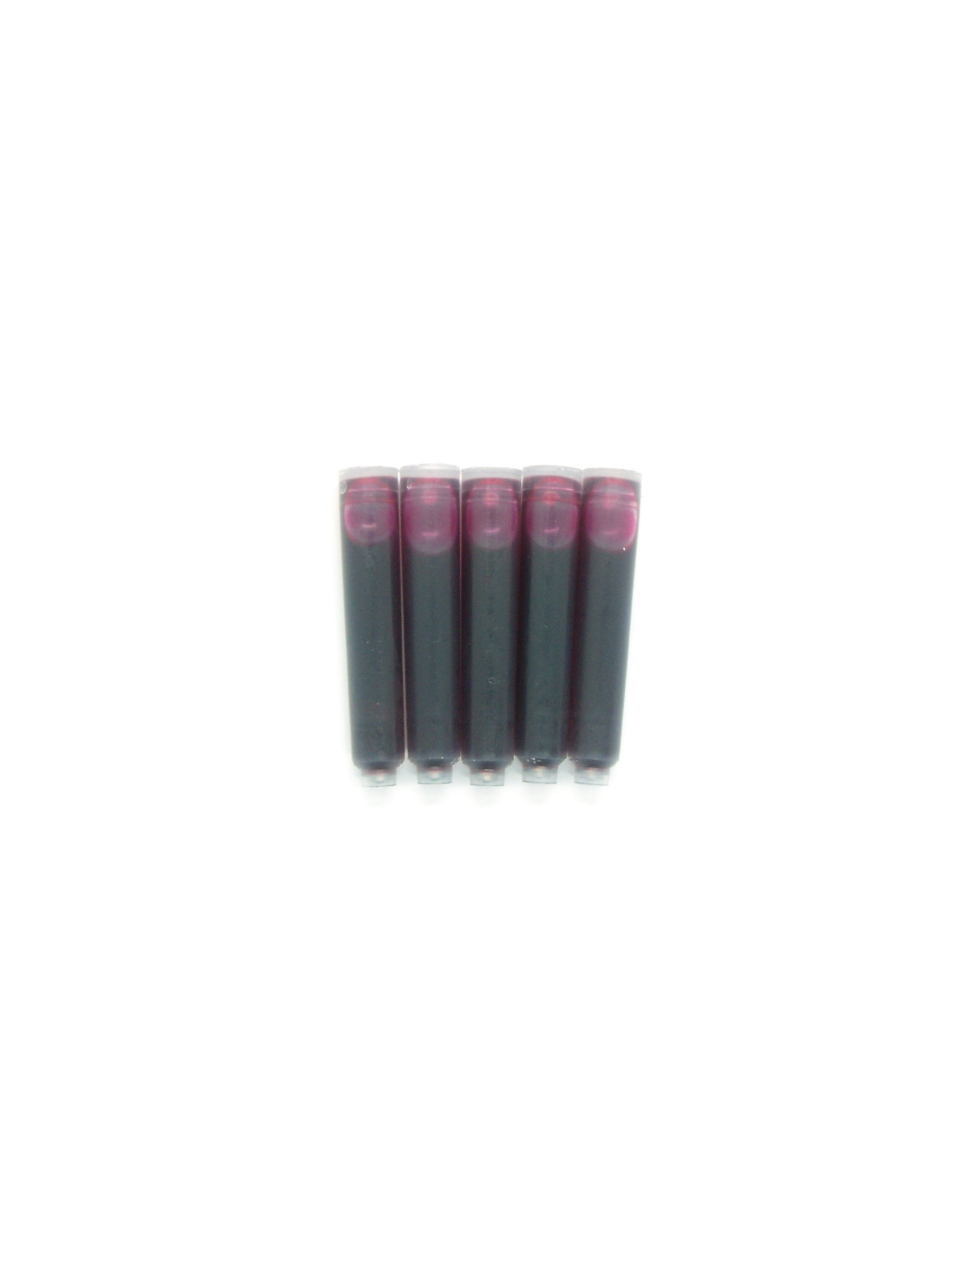 PenConverter Ink Cartridges For Libelle Fountain Pens (Pink)